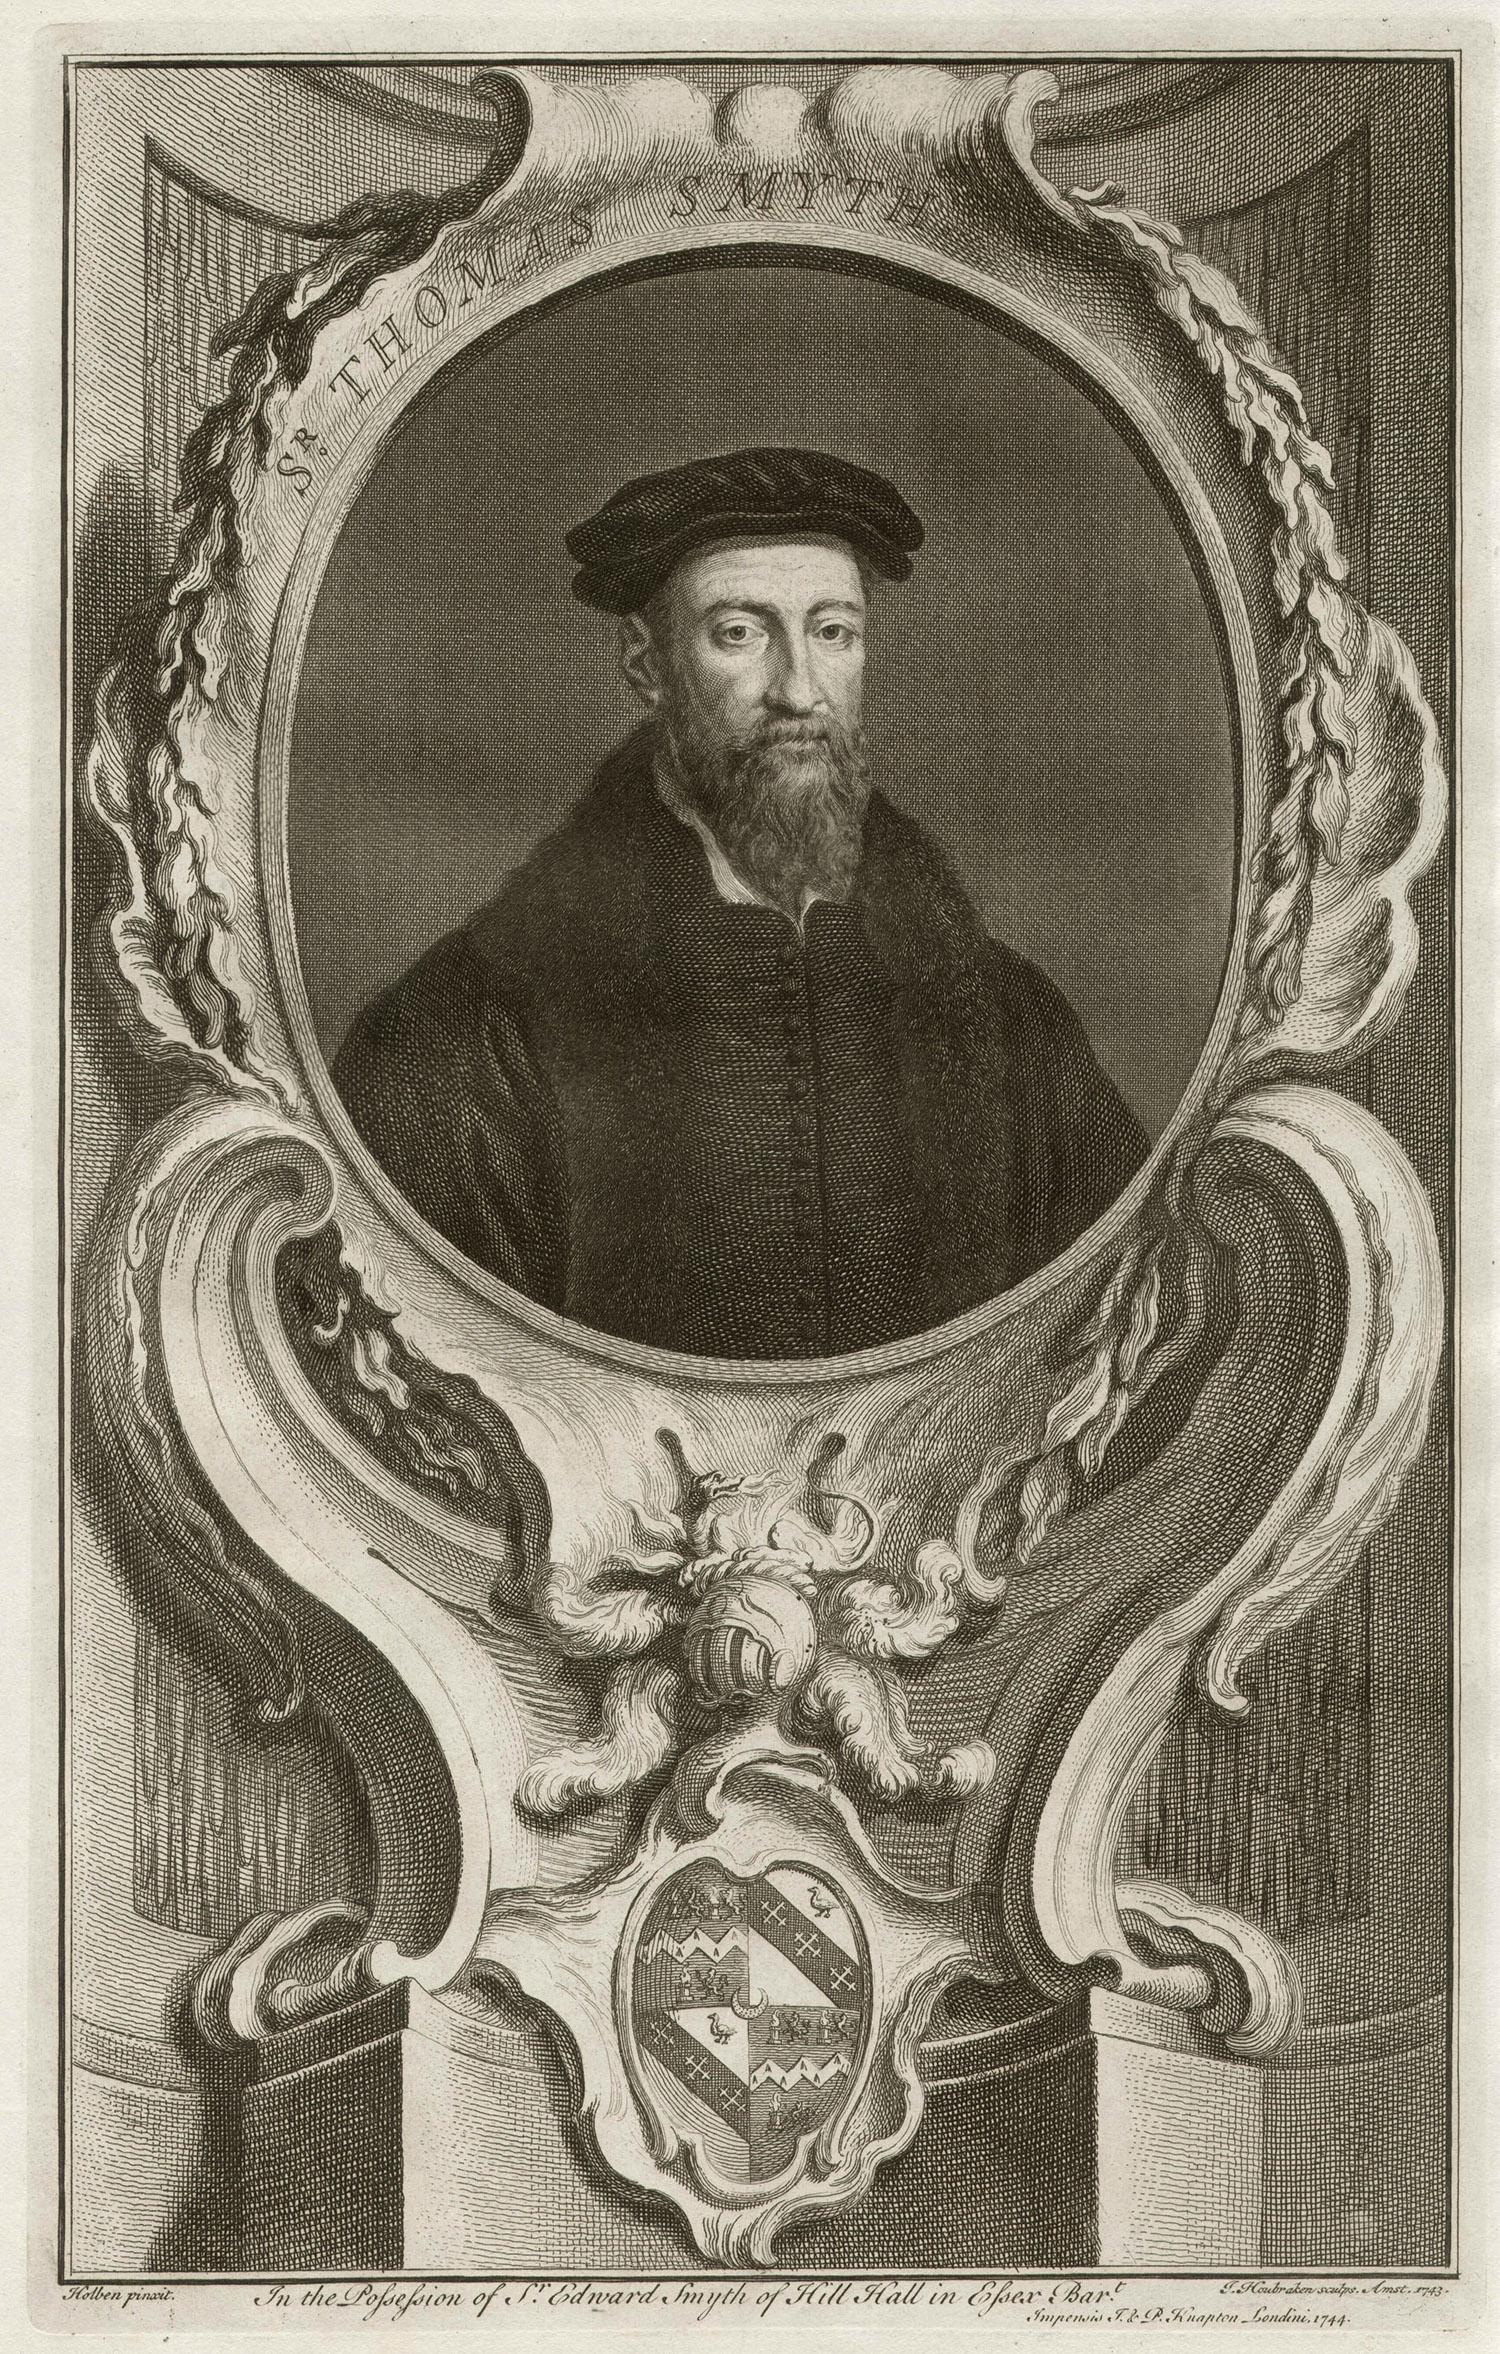 Sir Thomas Smyth, portrait engraving, c1820